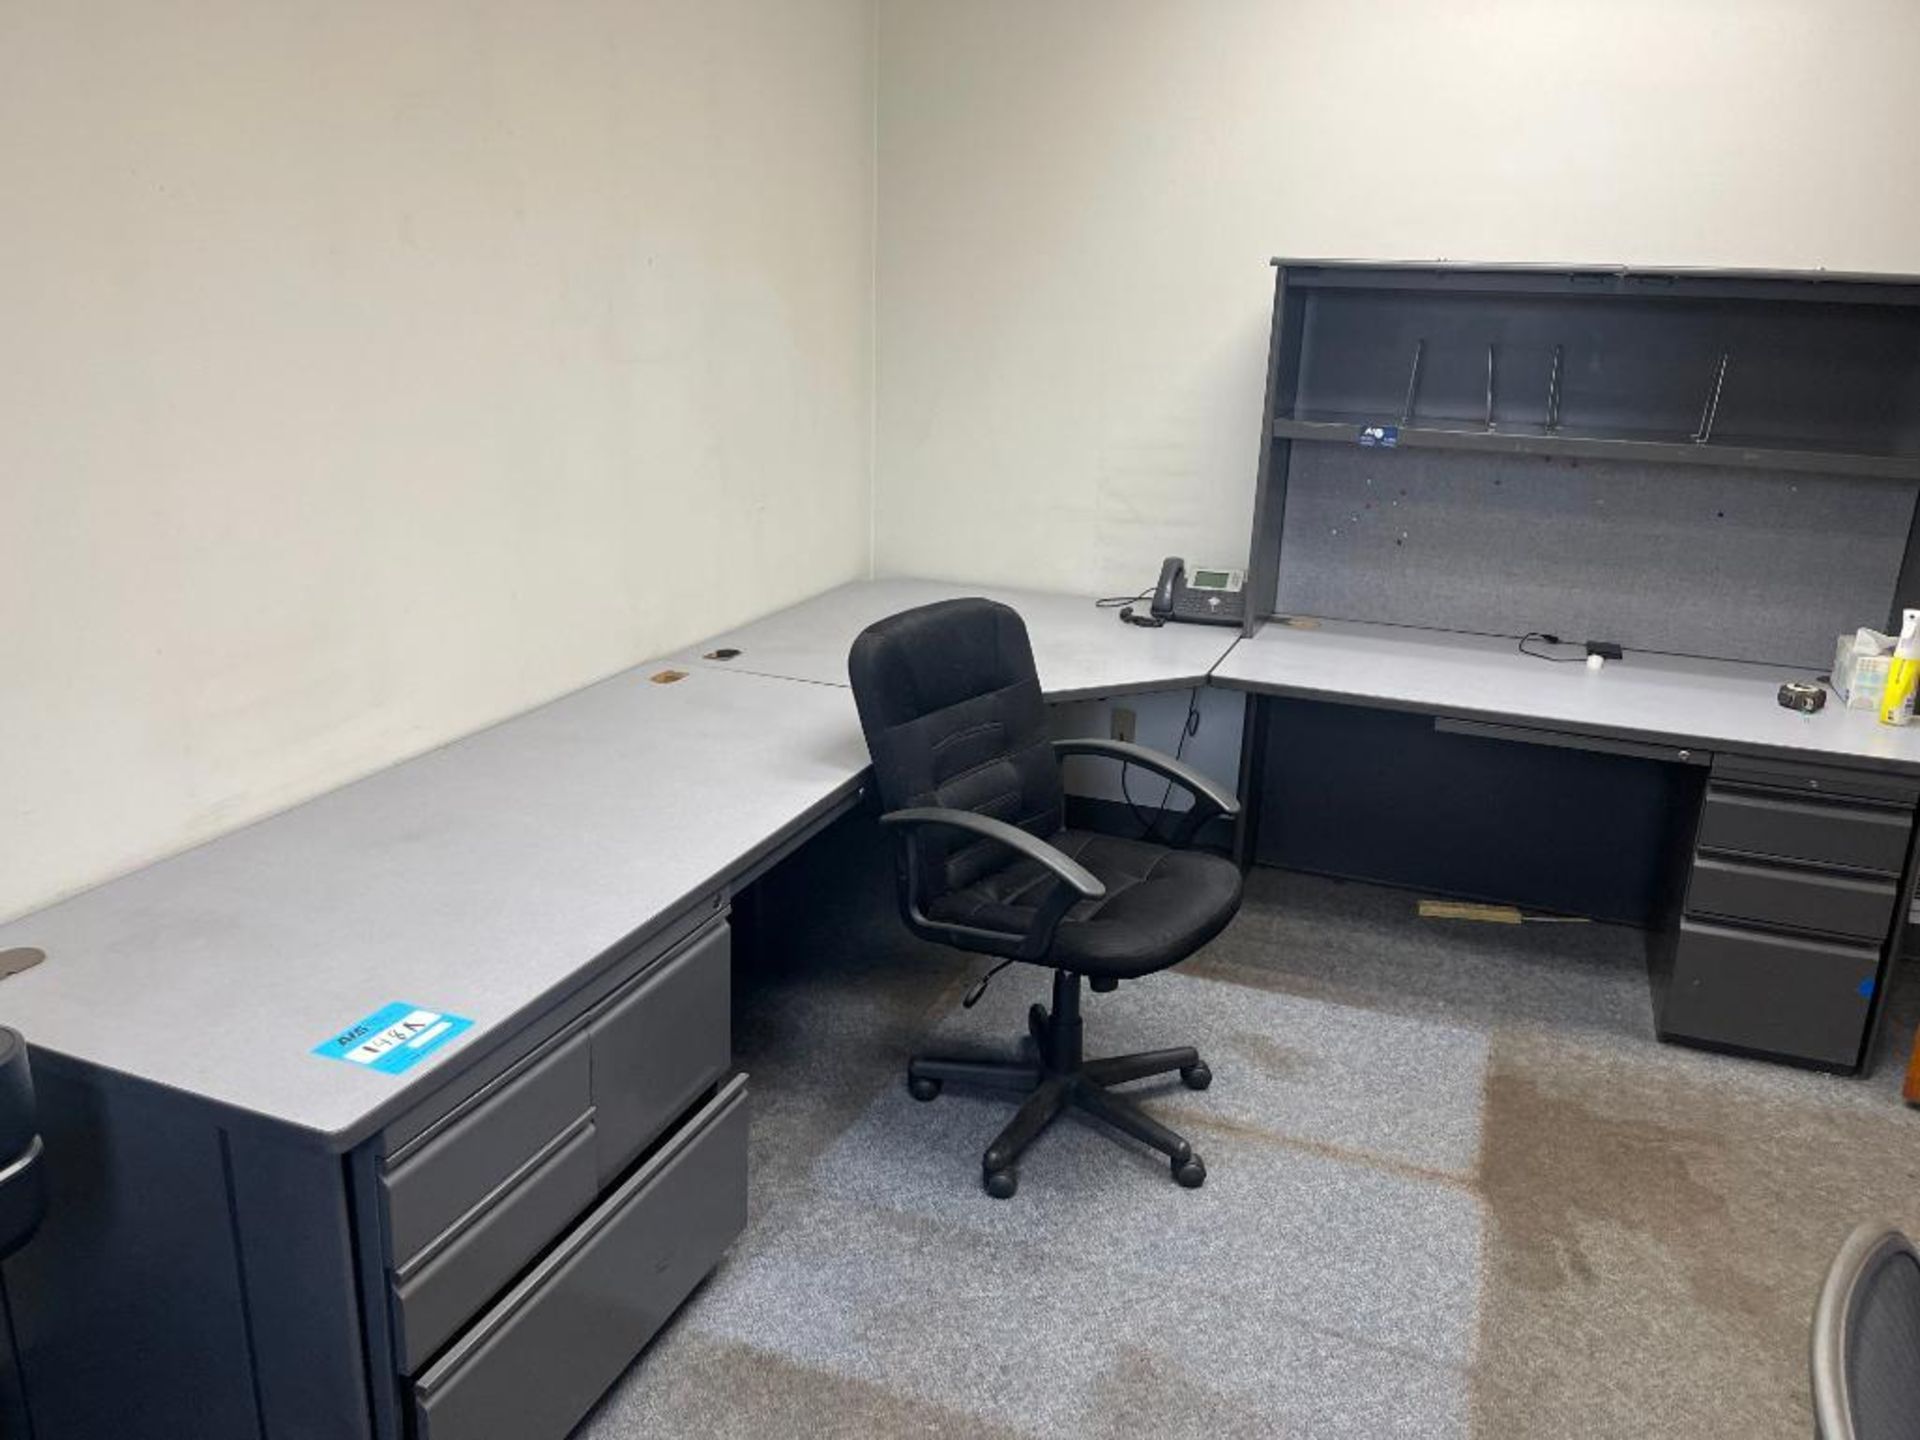 Lot: L-Shaped Desk with Additional Corner Desk & Chair